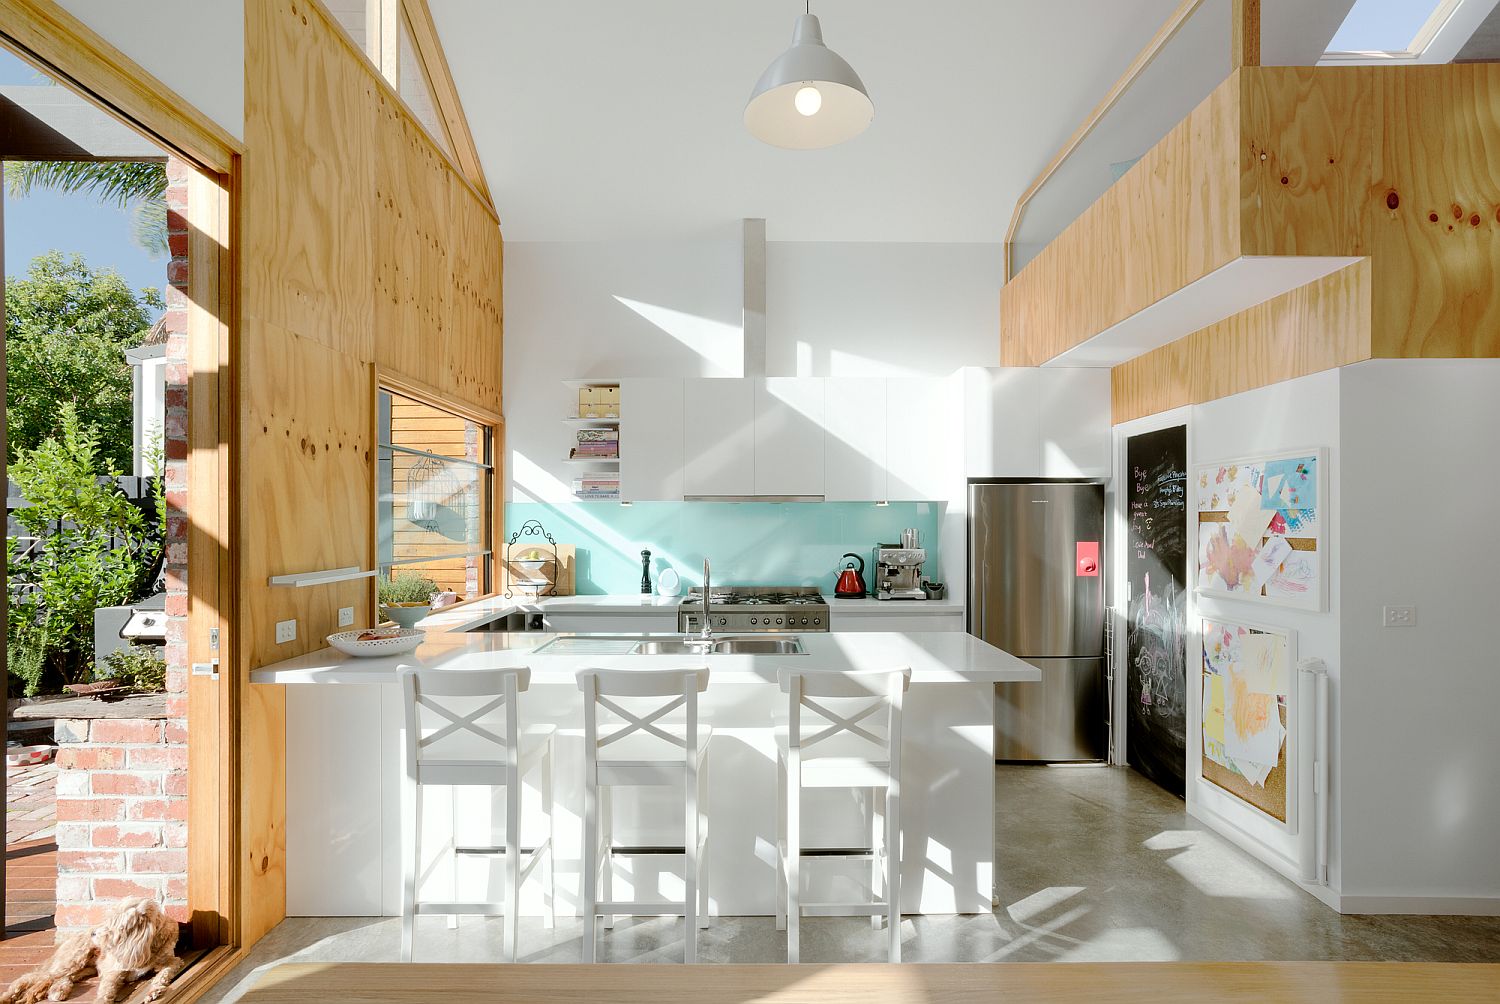 Fabulous-corner-kitchen-in-white-with-bright-blue-backsplash